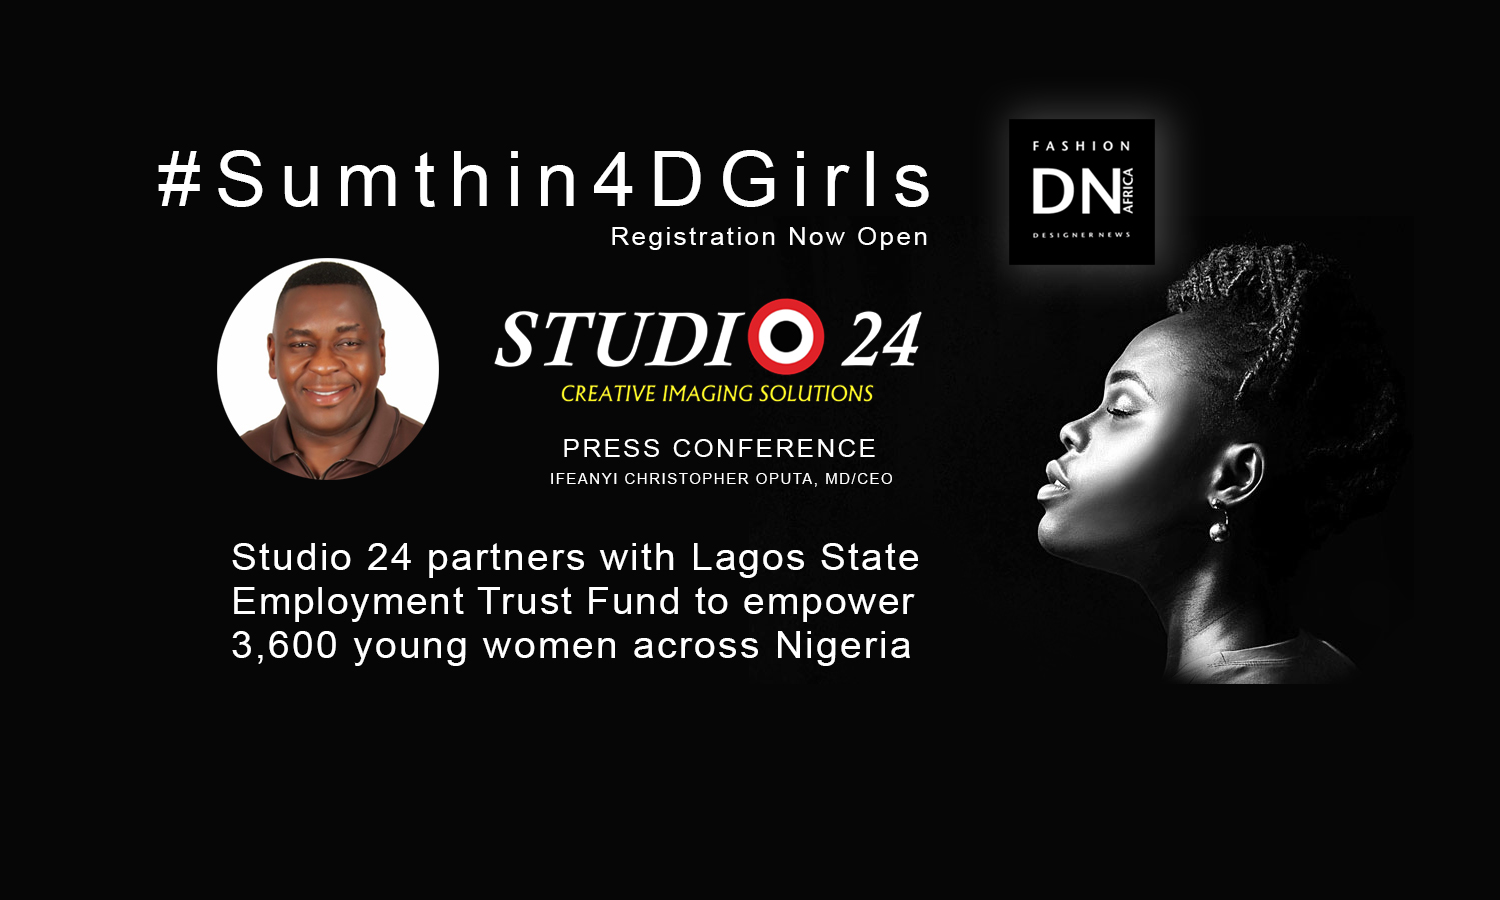 dnafrica-sumthin4Dgirls-studio24-nigeria-press-conference